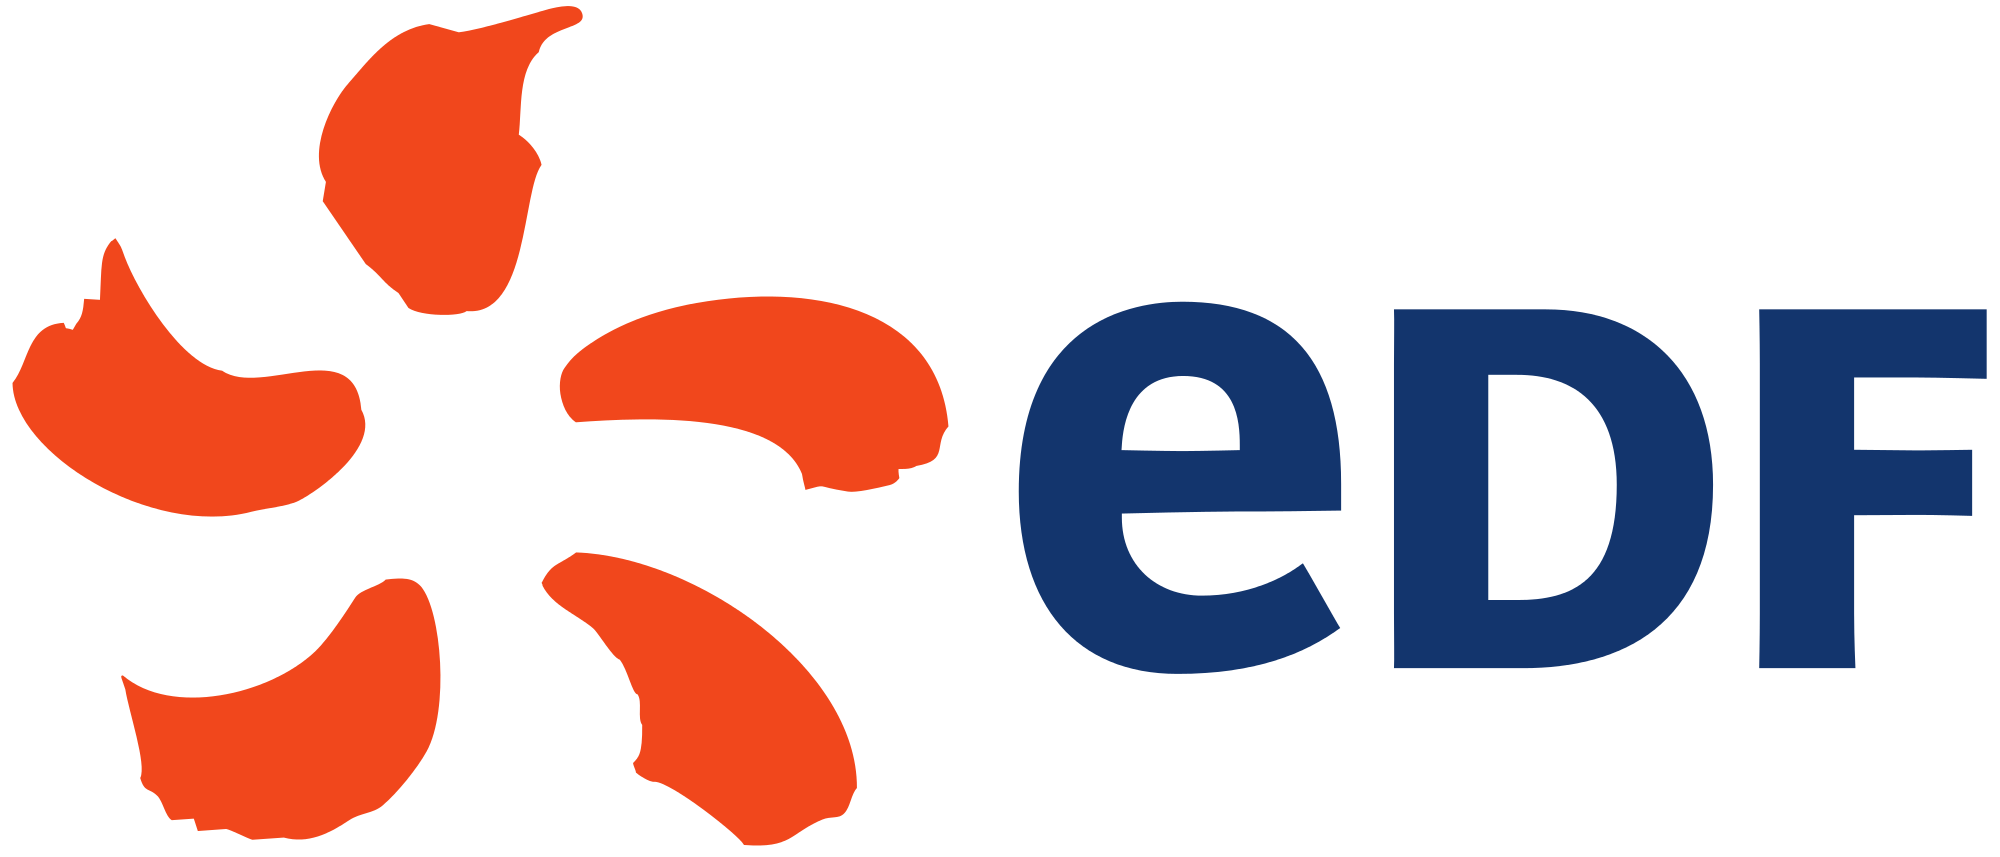 Electricite_de_France_logo。svg (1)